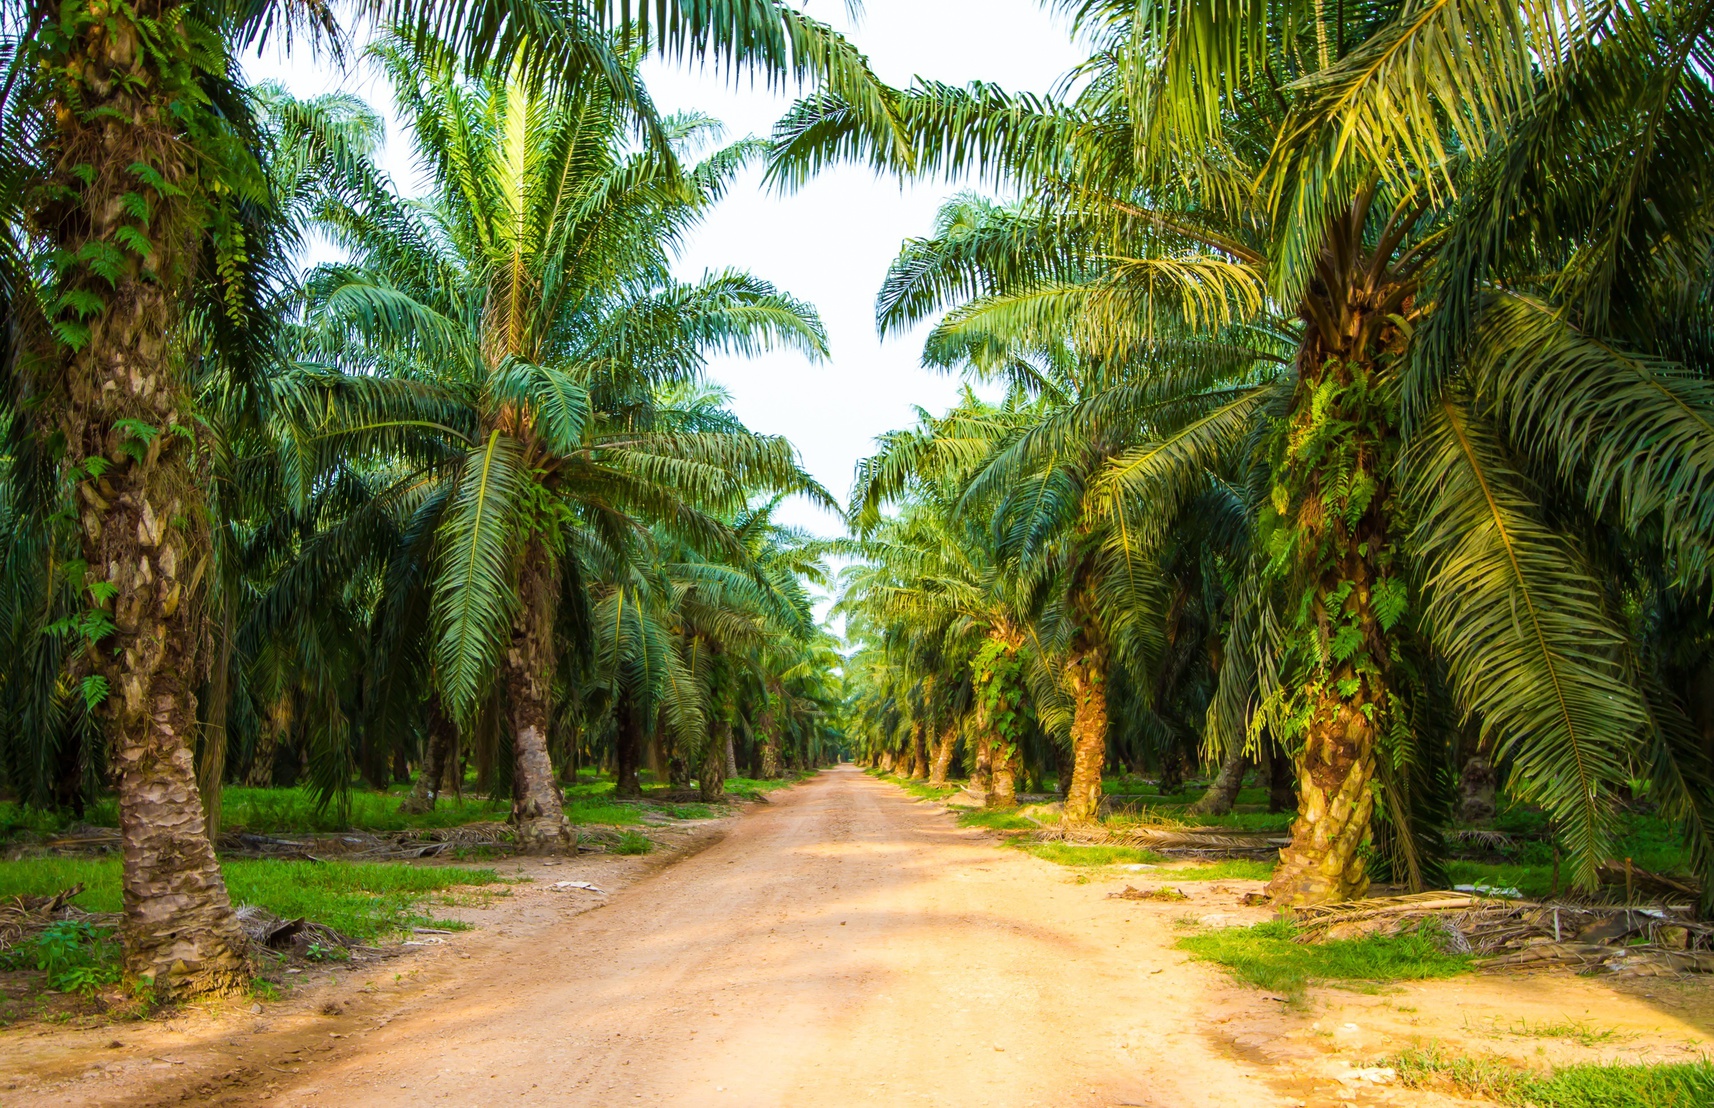 Palm oil plantation in Malaysia